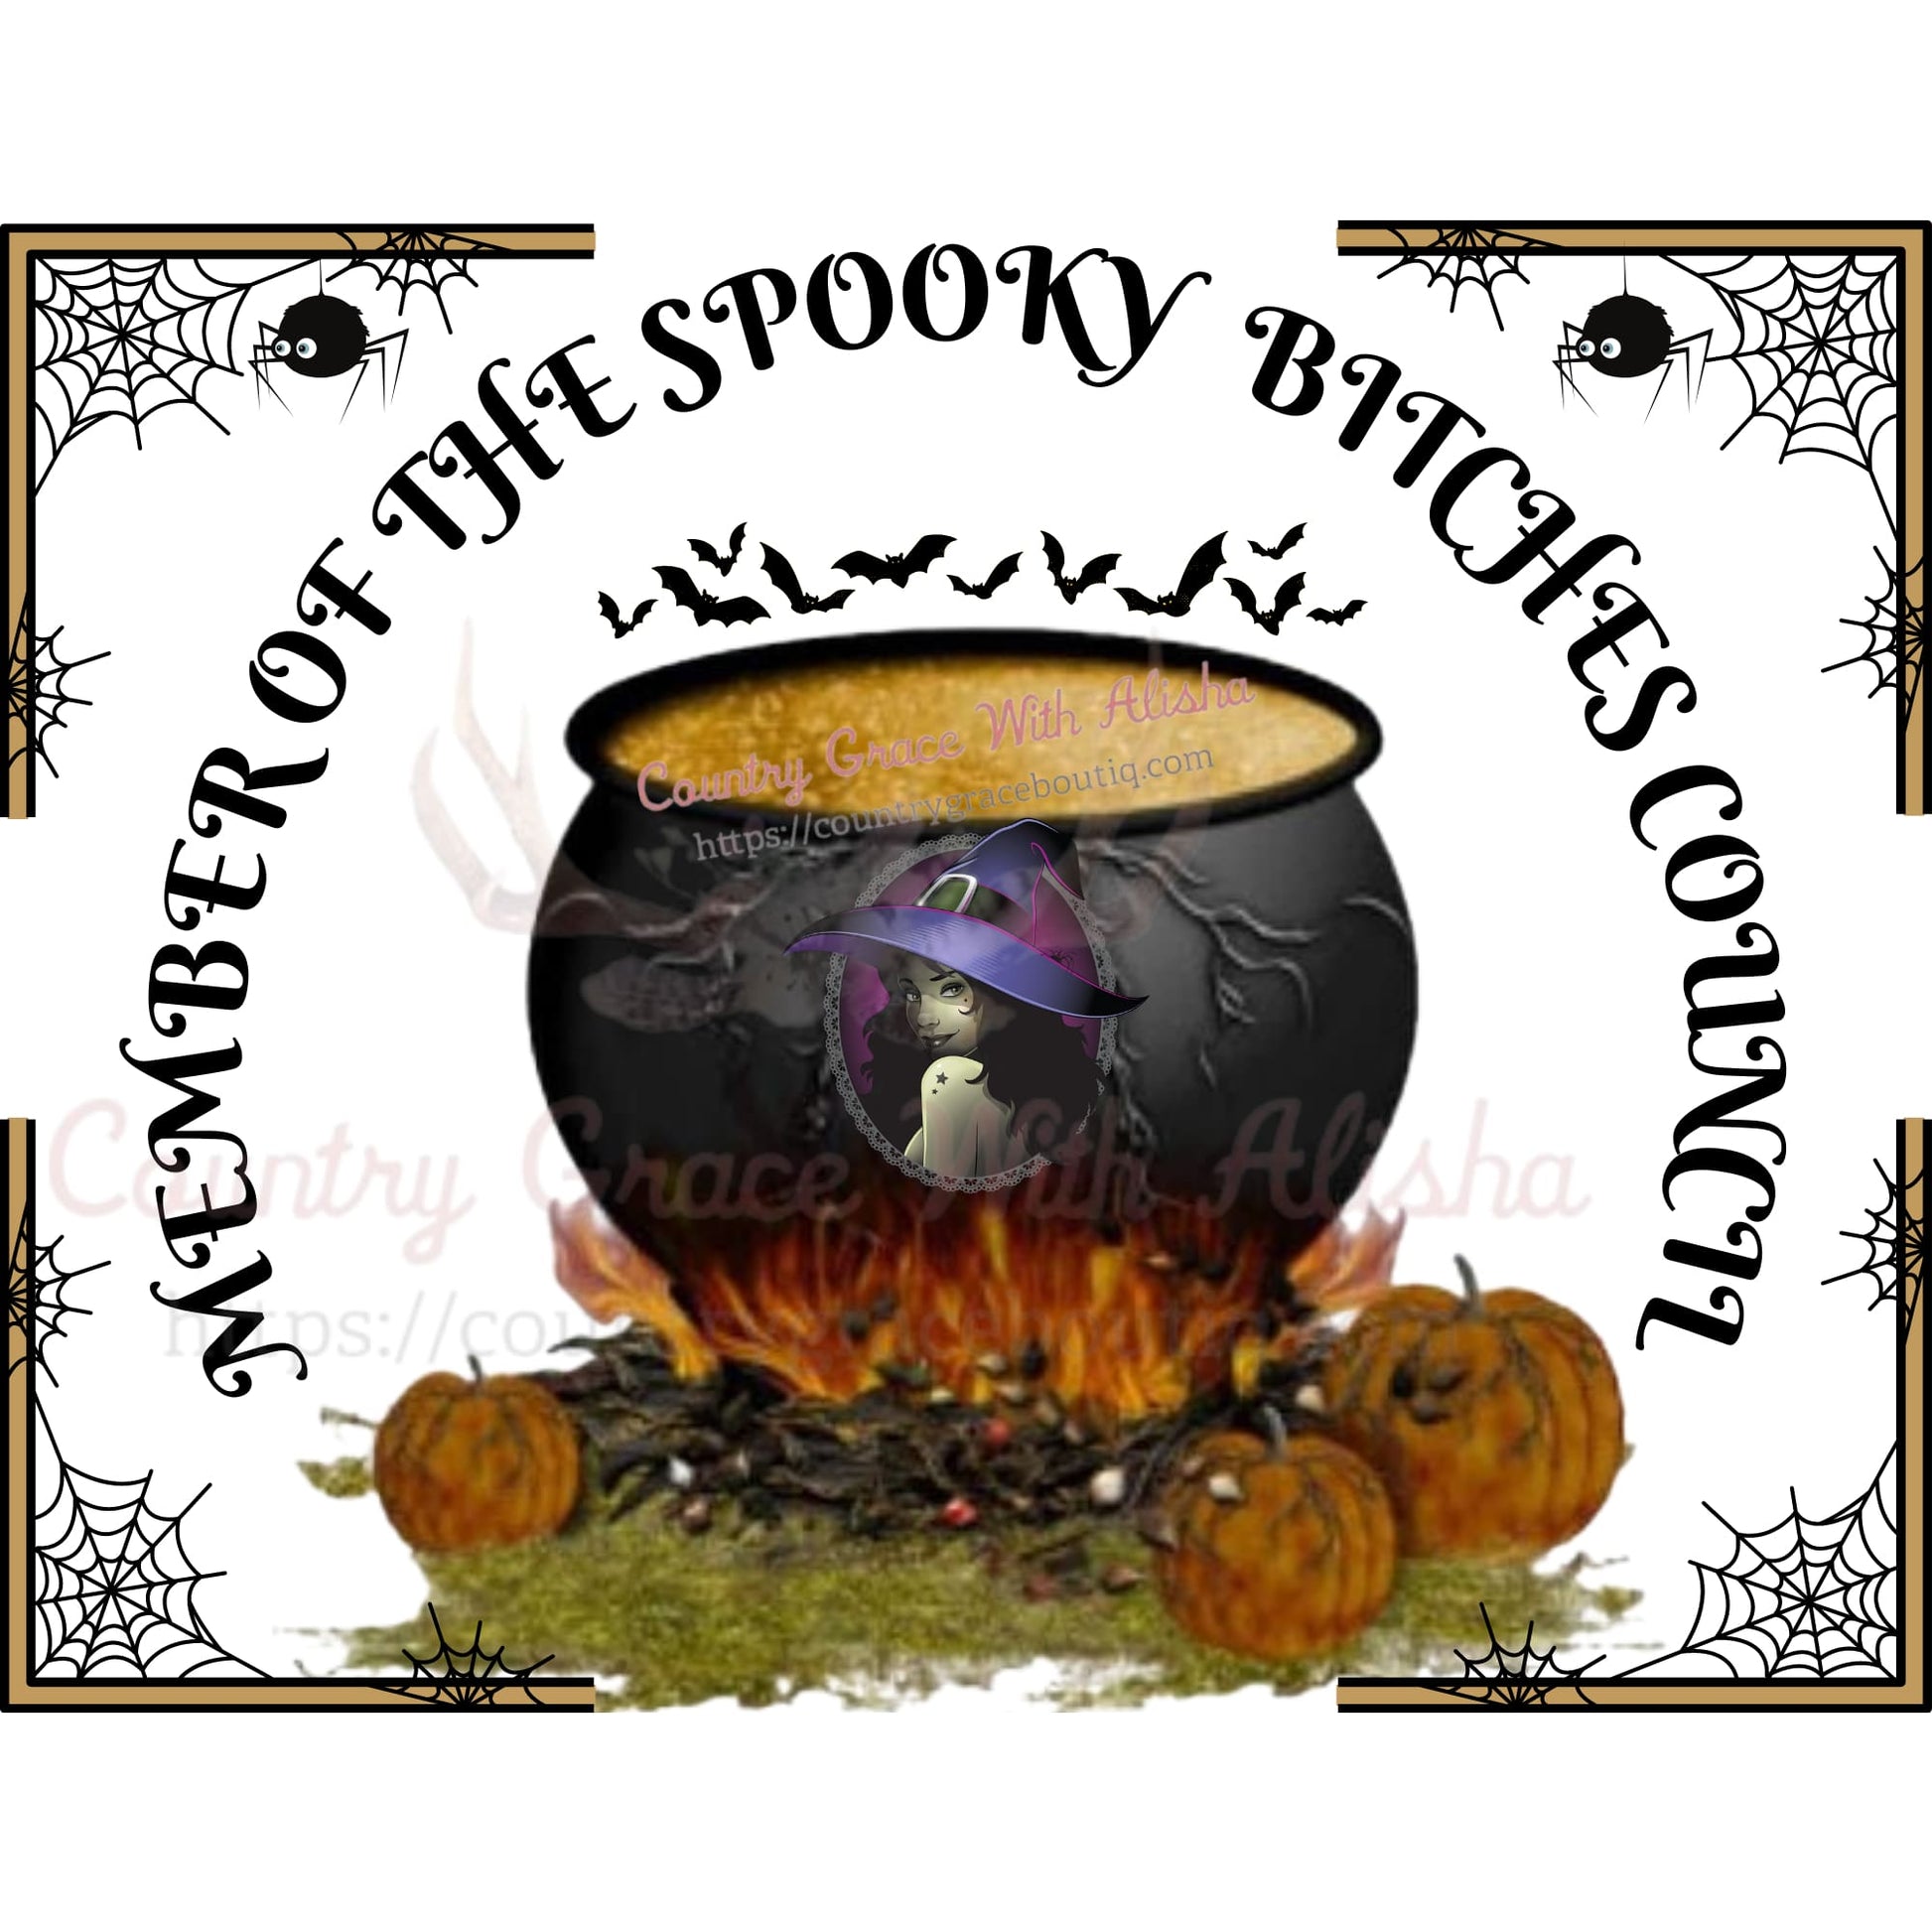 Spooky Bitches Council Sublimation Transfer - Sub $1.50 